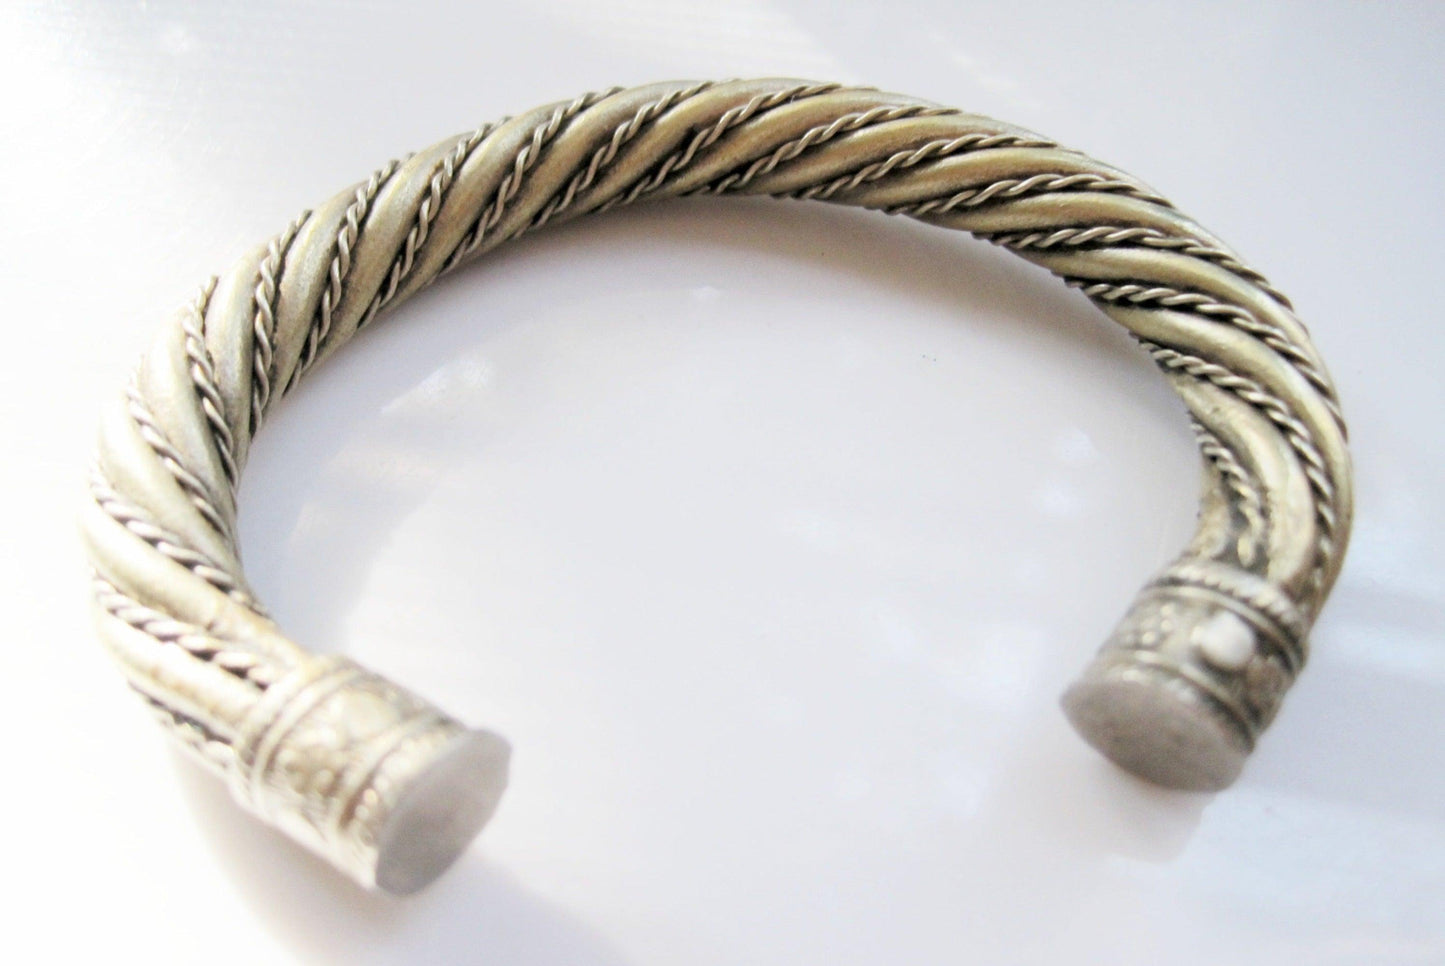 Bedouin Yemeni Twisted Rope C Cuff Bracelet - Anteeka